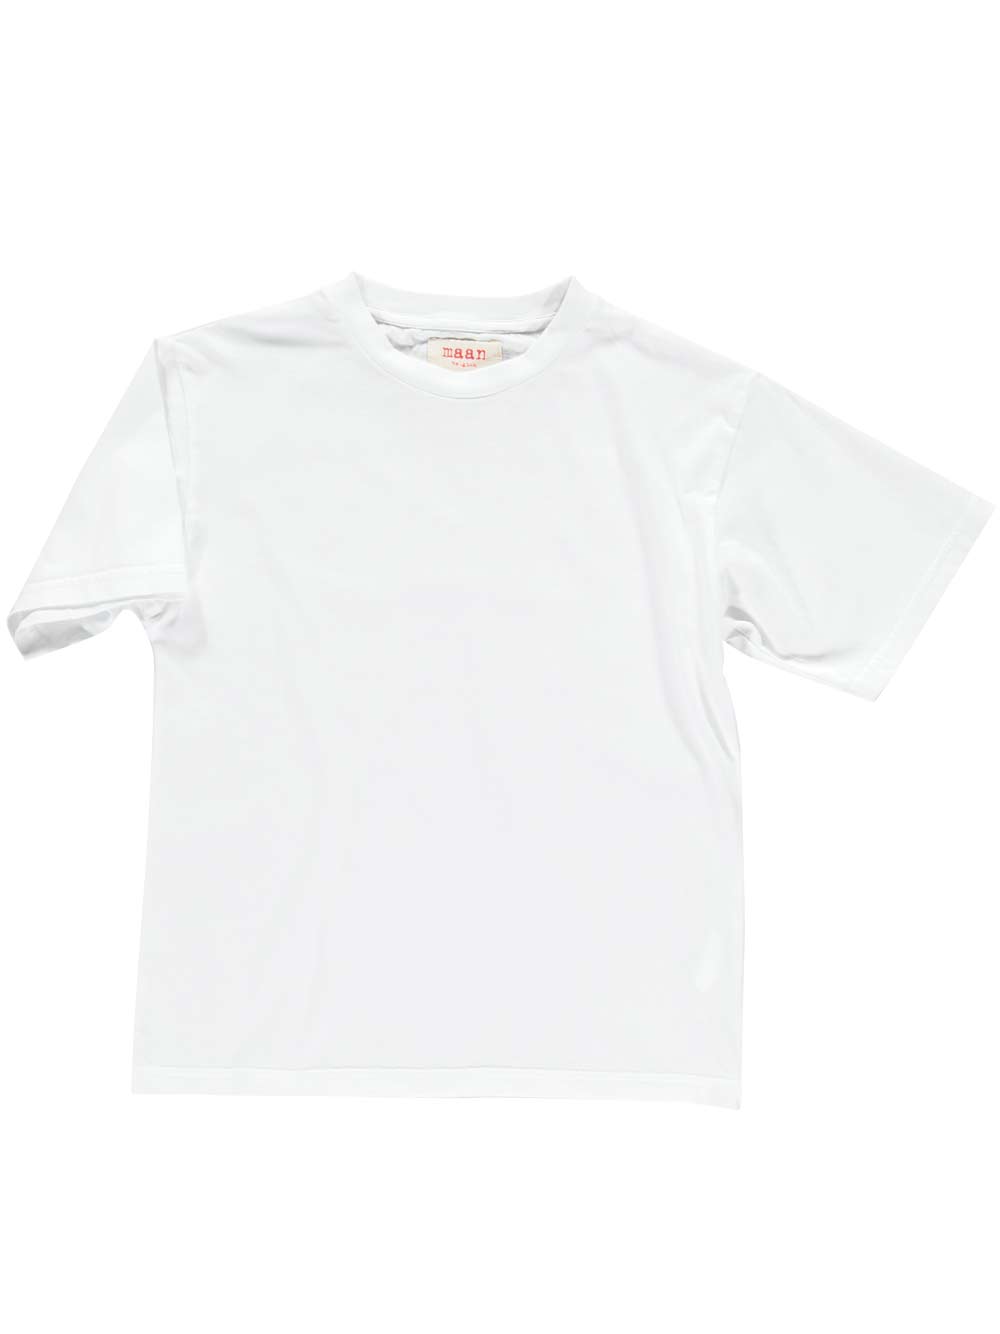 Beetle White T-Shirt